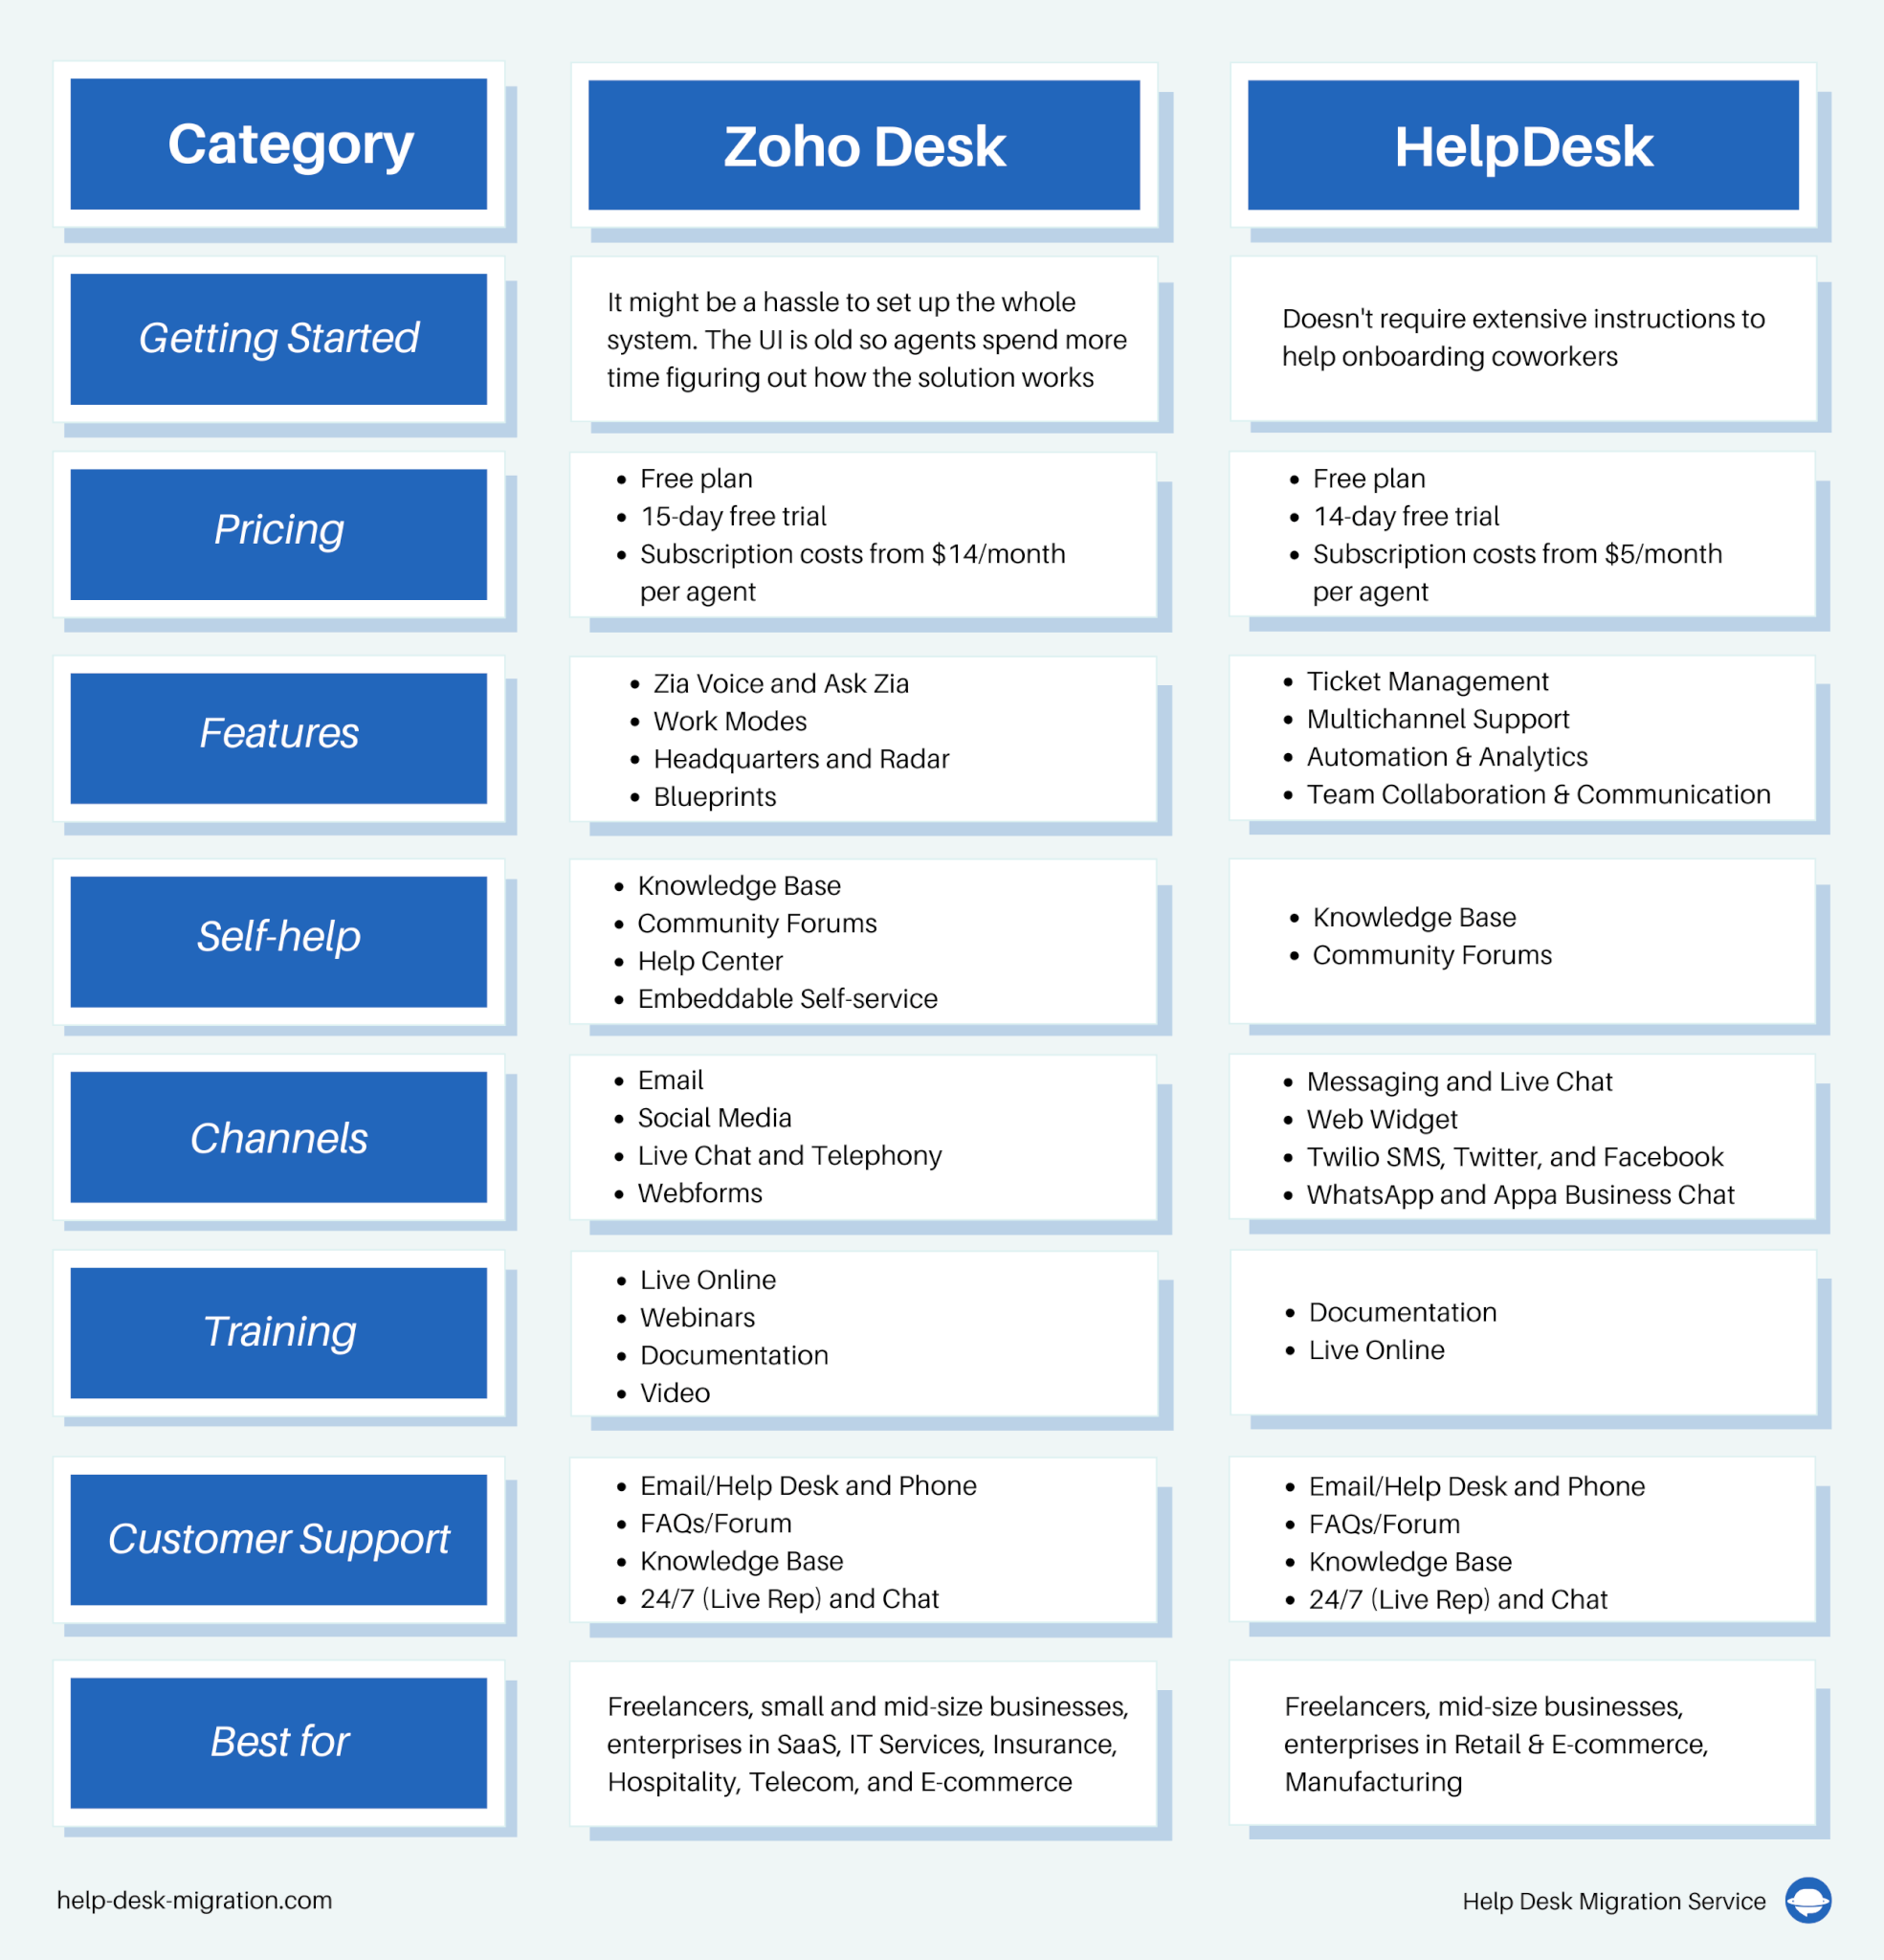 HelpDesk vs Zoho Desk